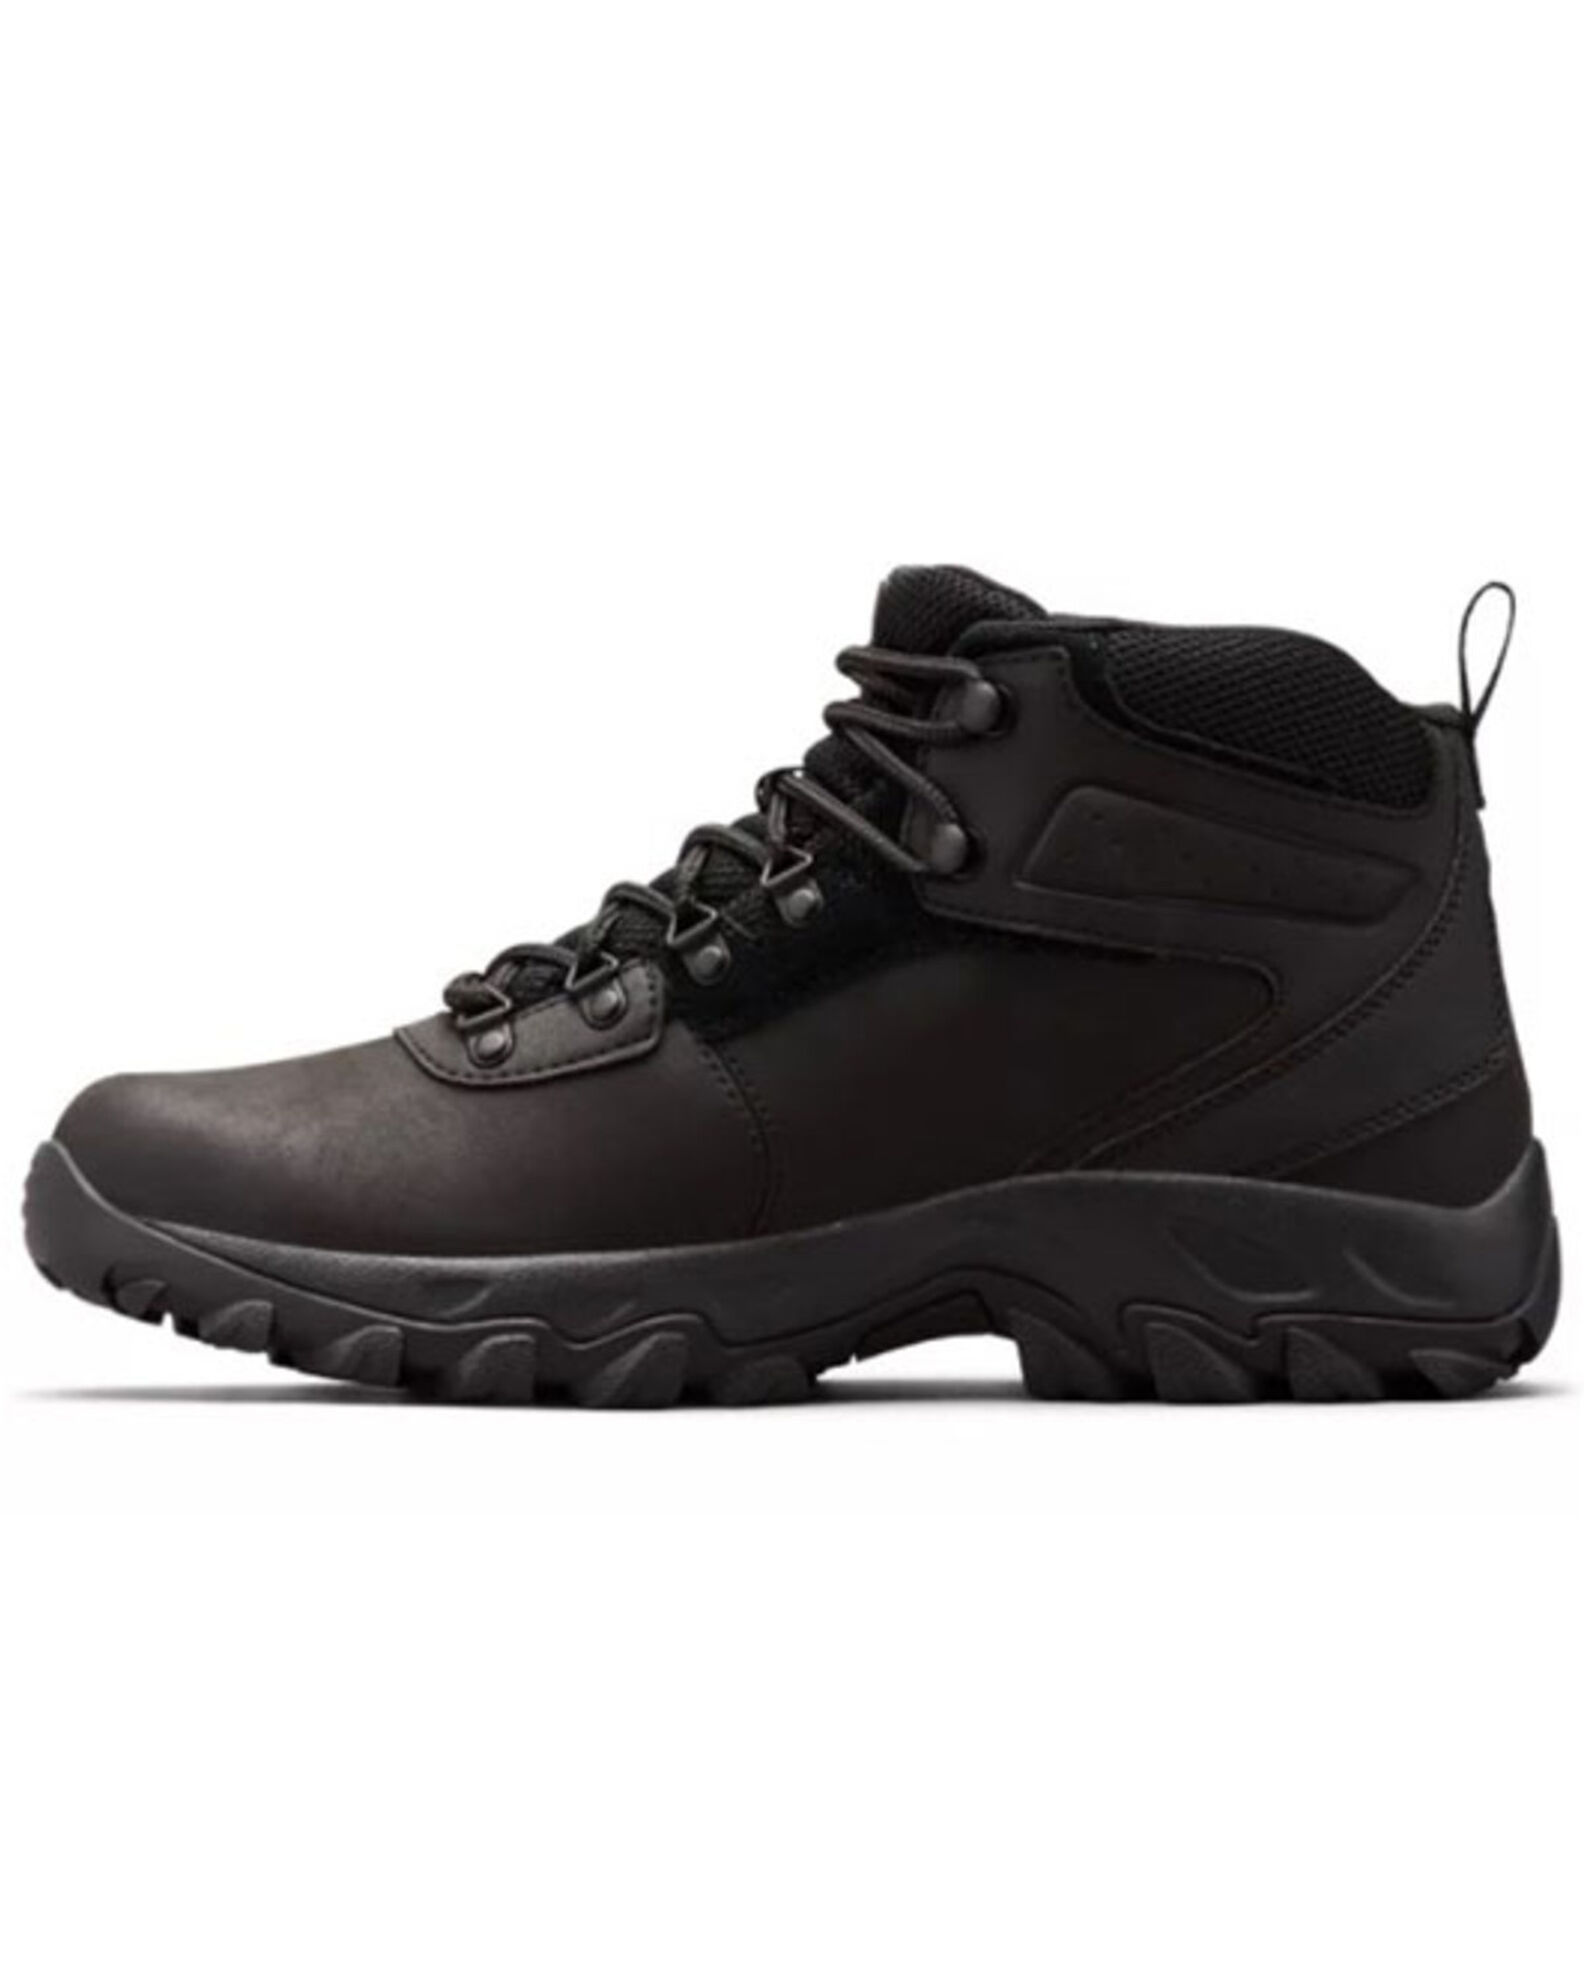 Columbia Men's Newton Ridge Black Waterproof Hiking Boots - Soft Toe ...